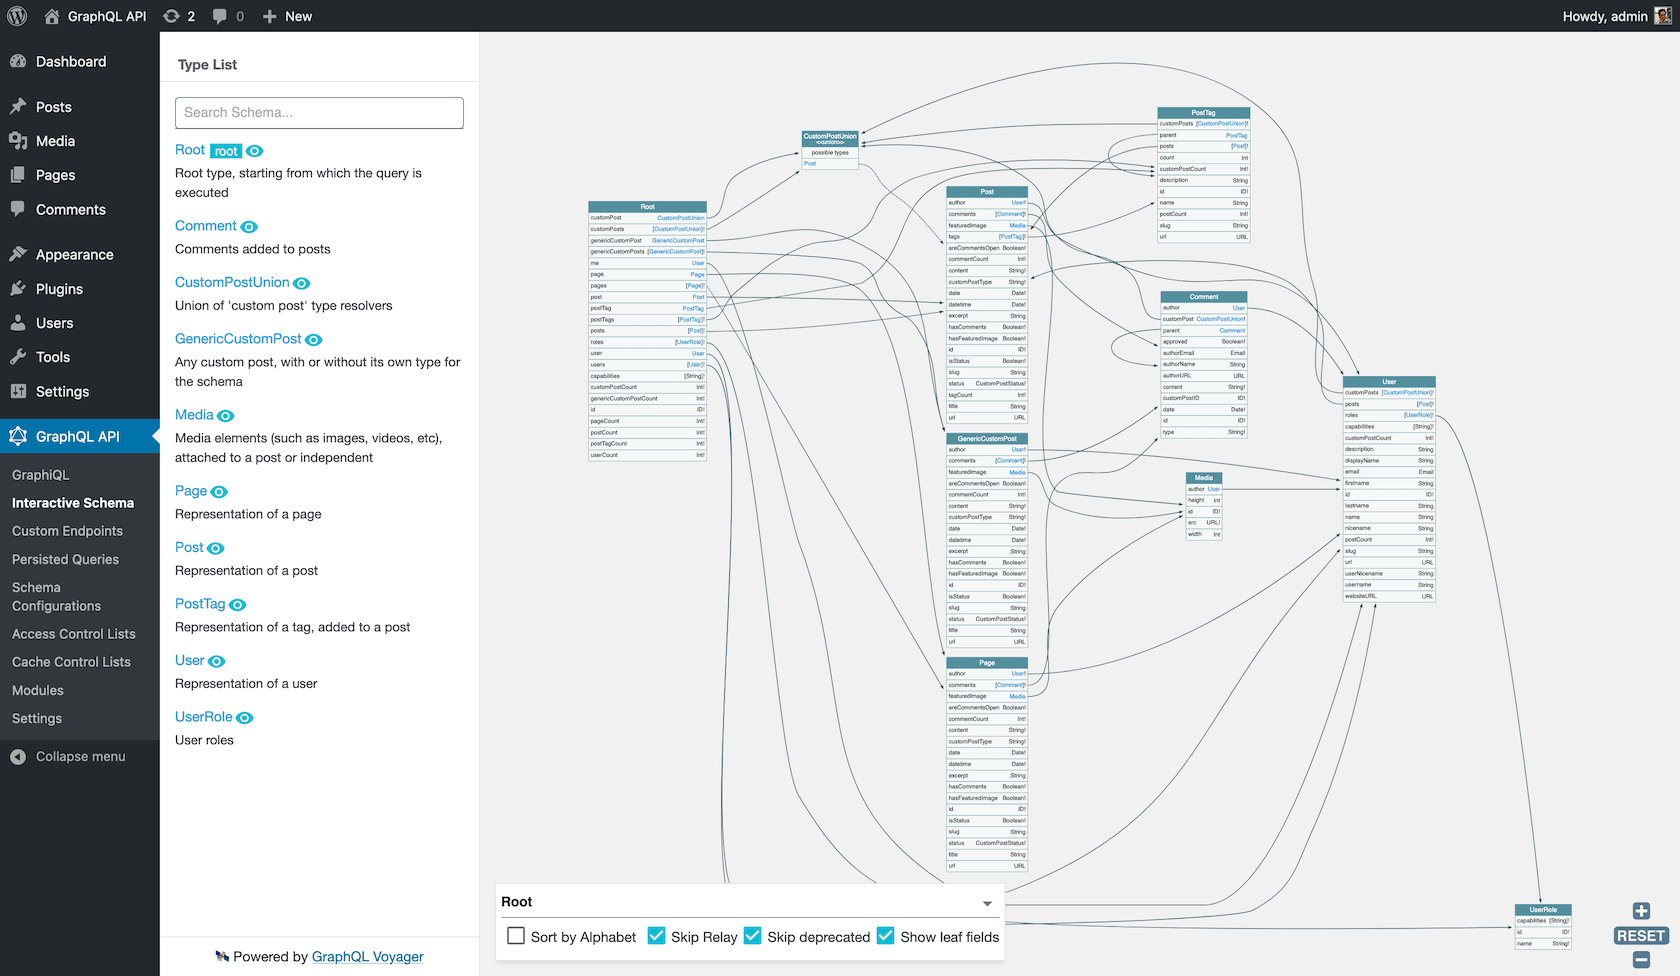 The interactive schema visualizer